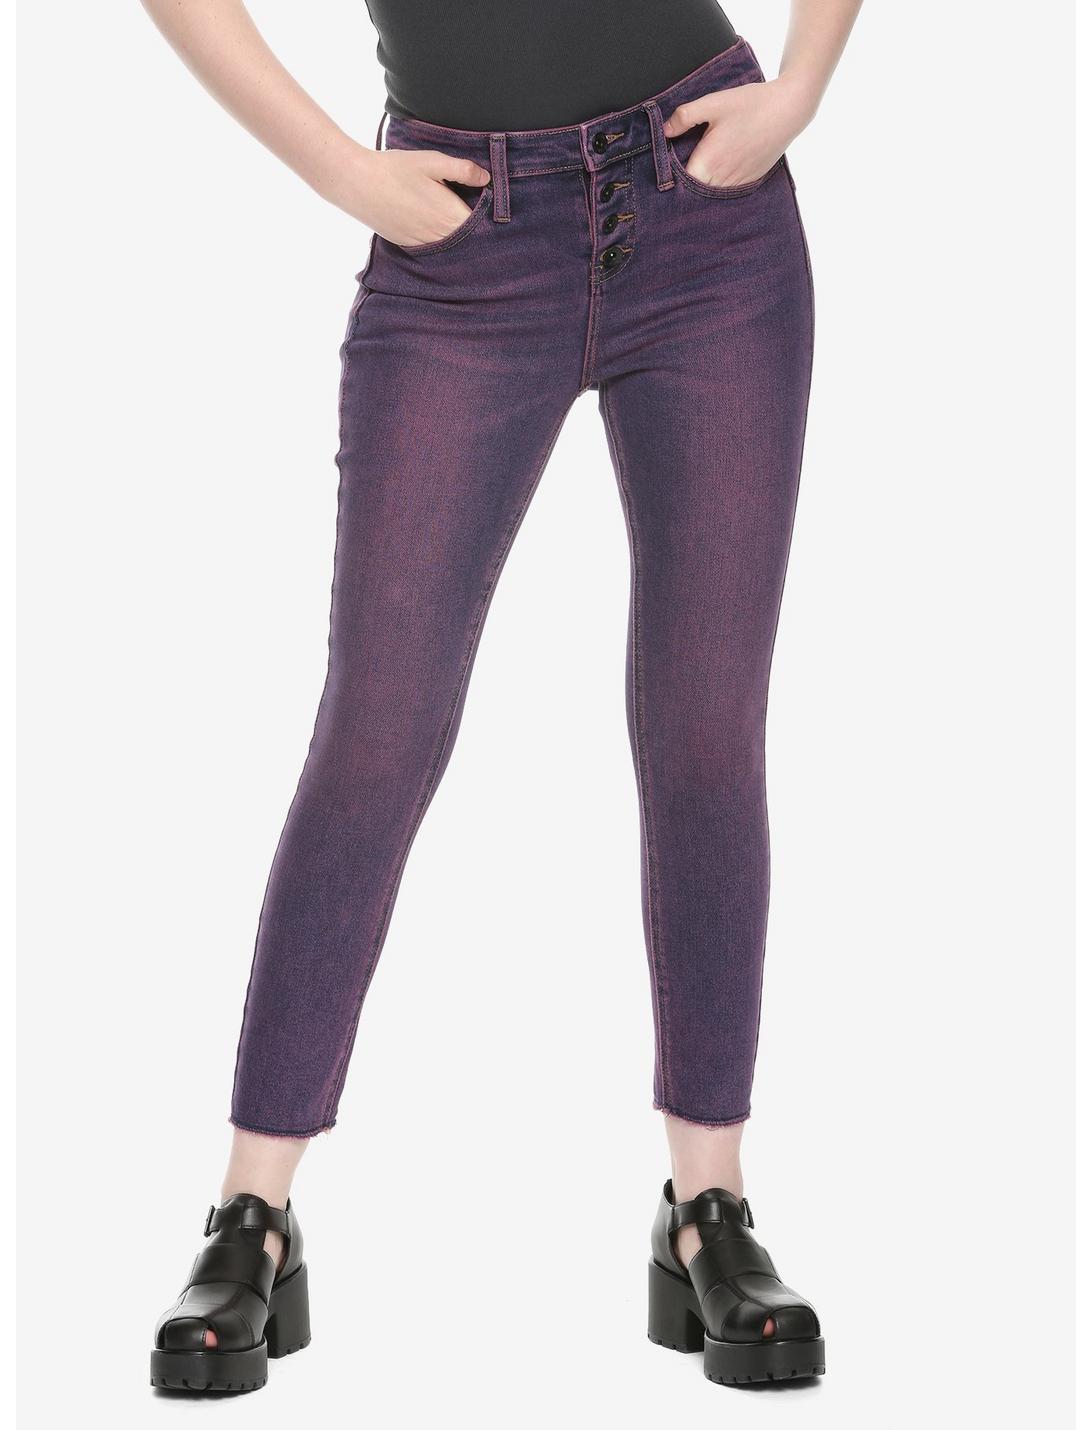 HT Denim Purple Wash Hi-Rise Super Skinny Jeans, PURPLE, hi-res